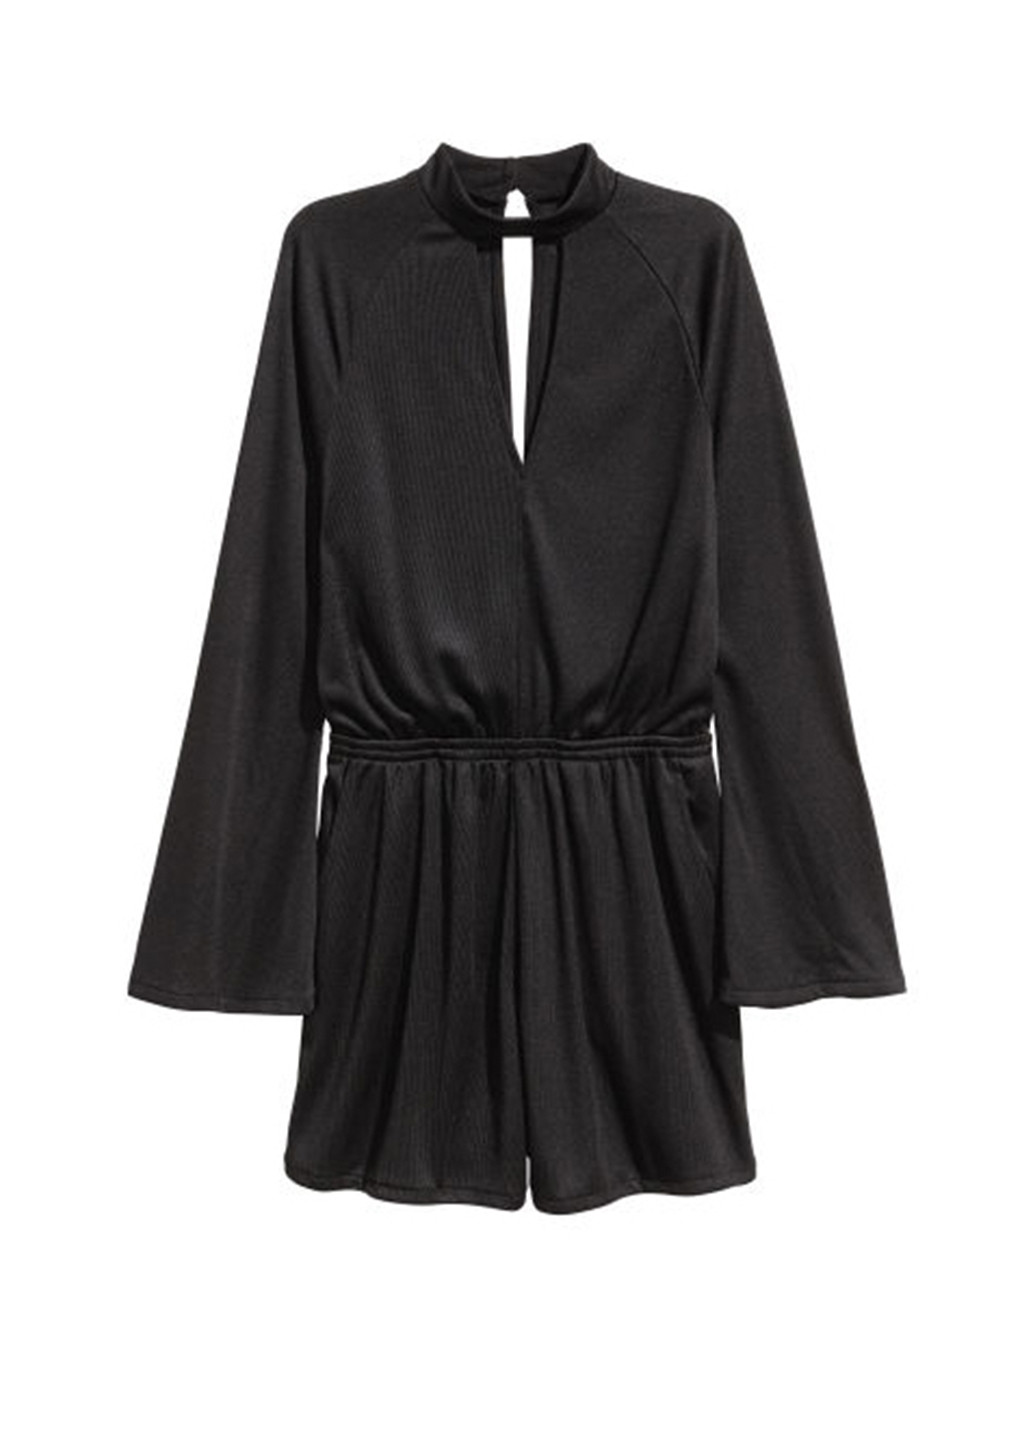 Комбинезон H&M комбинезон-шорты однотонный чёрный кэжуал трикотаж, полиэстер